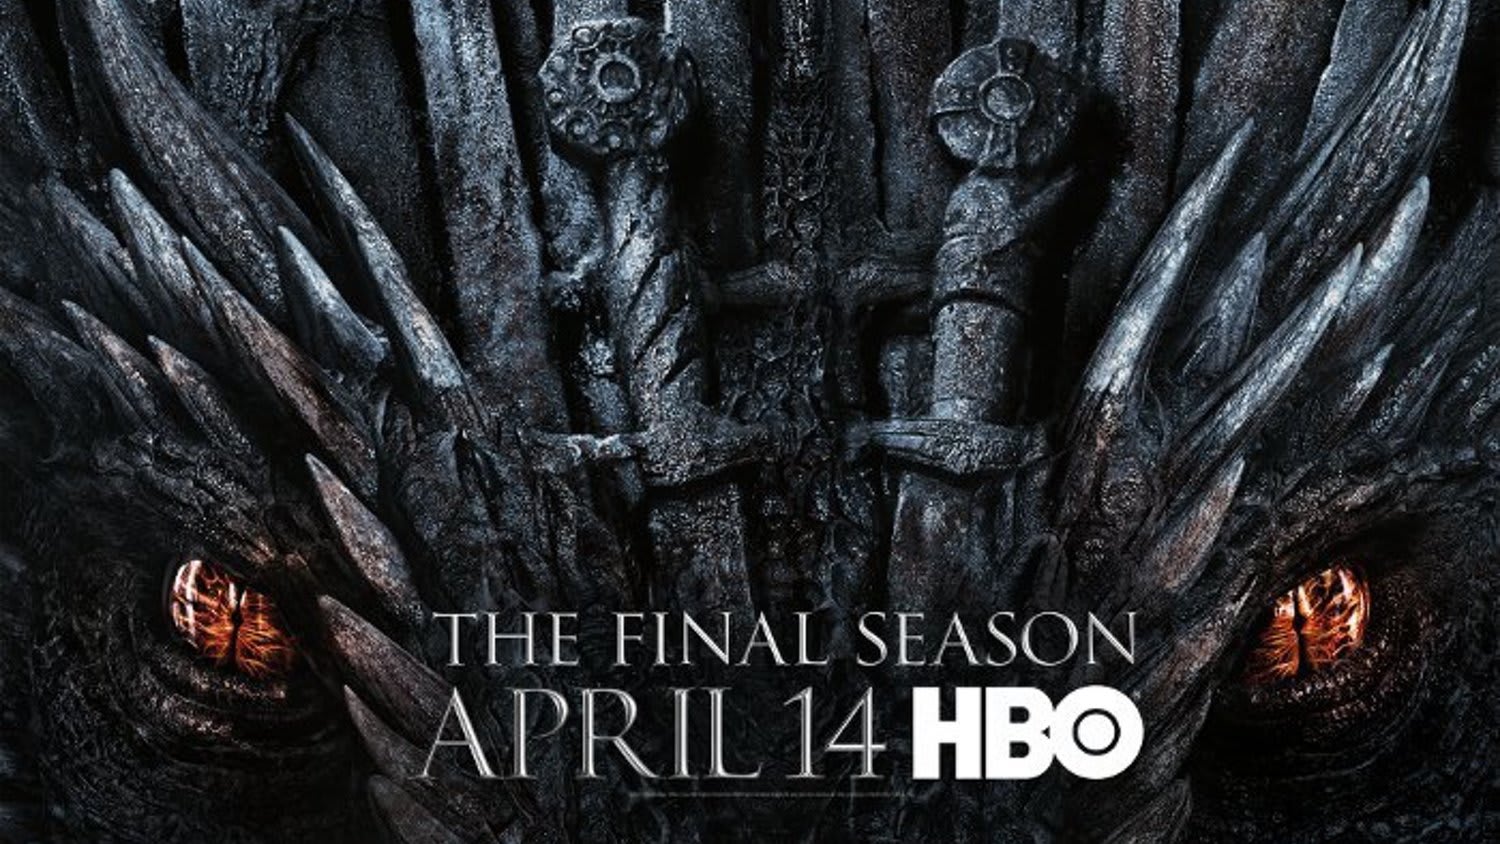 Mix Game Of Thrones Season 8 Now On Amazon Dvd On Sale